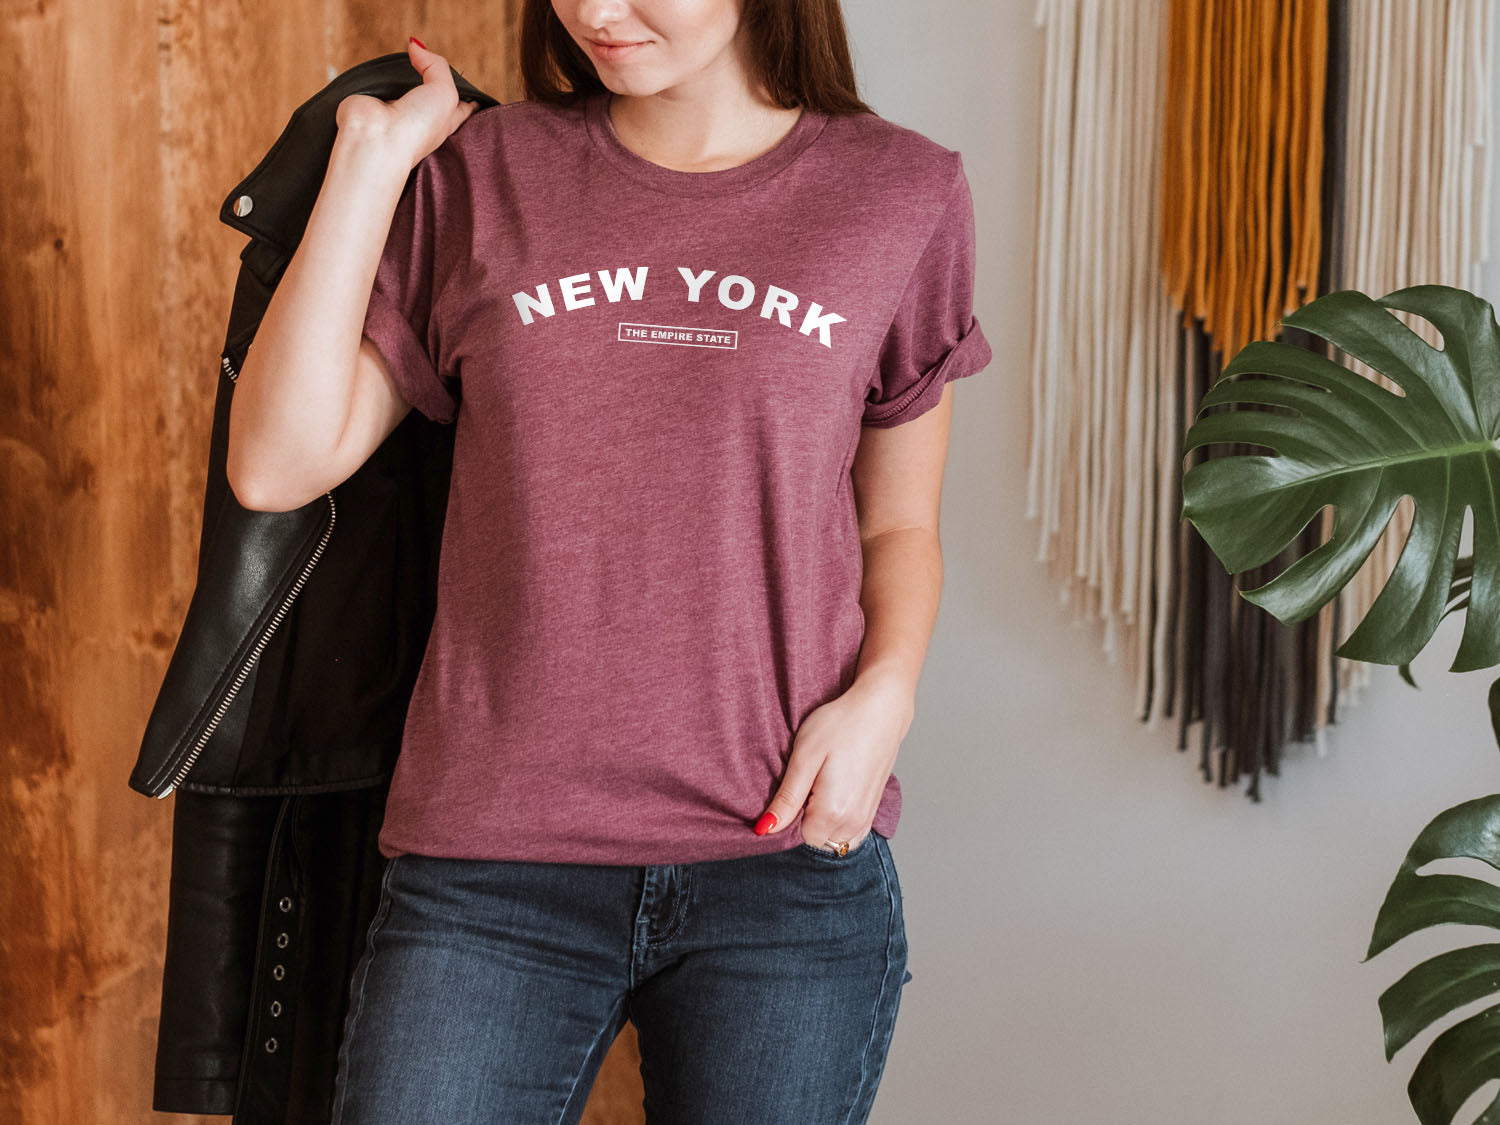 New York The Empire State T-shirt - United States Name & Slogan Minimal Design Printed Tee Shirt